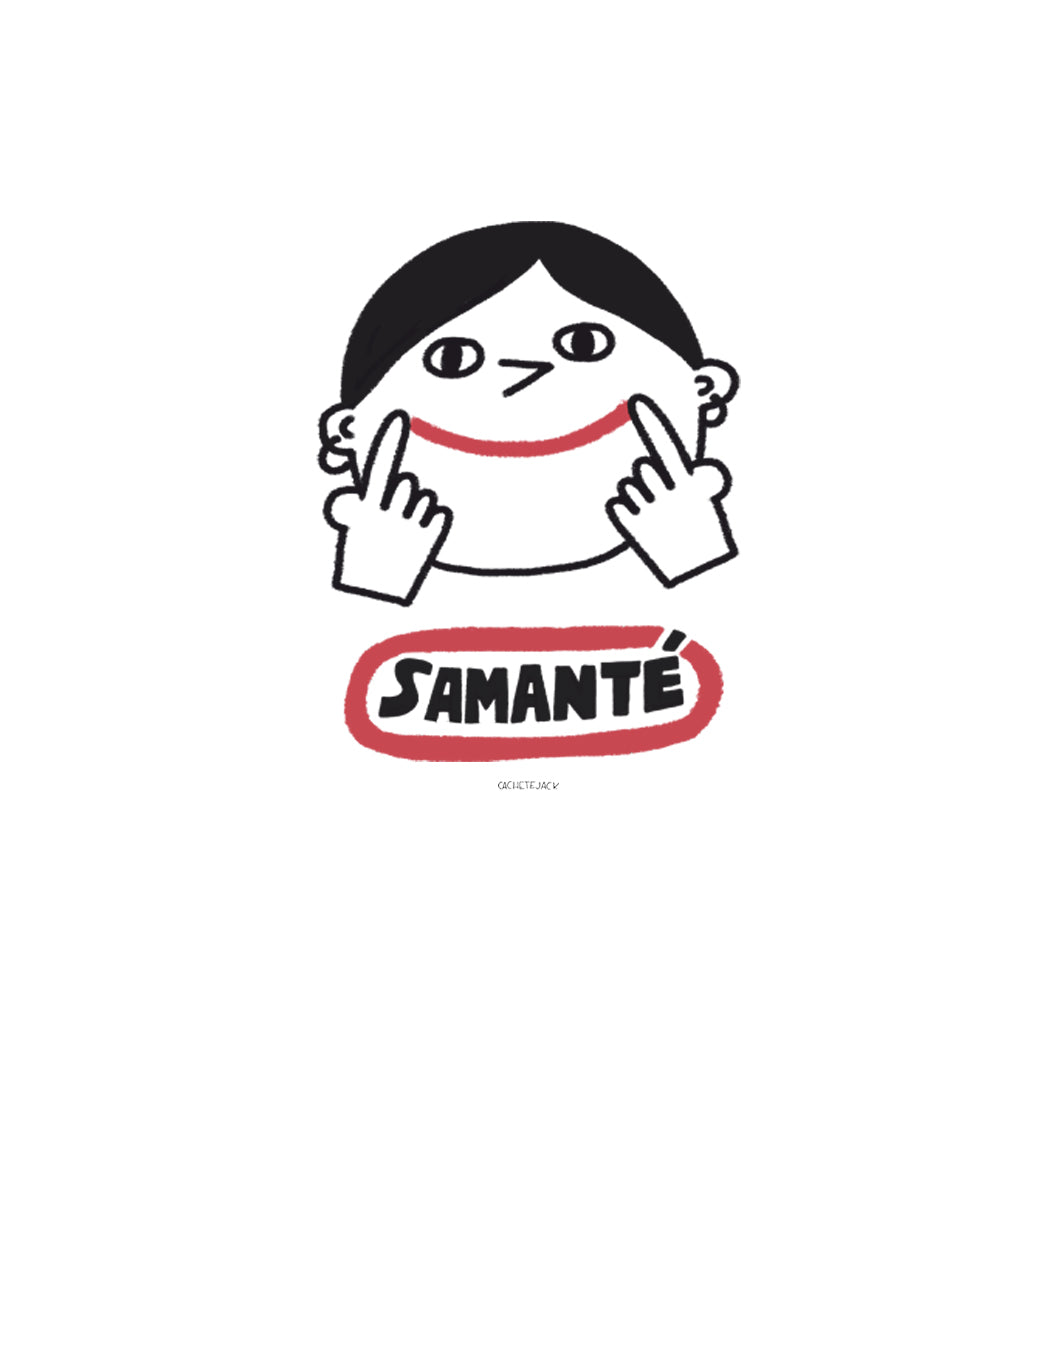 Camiseta x CacheteJack para Samanté!